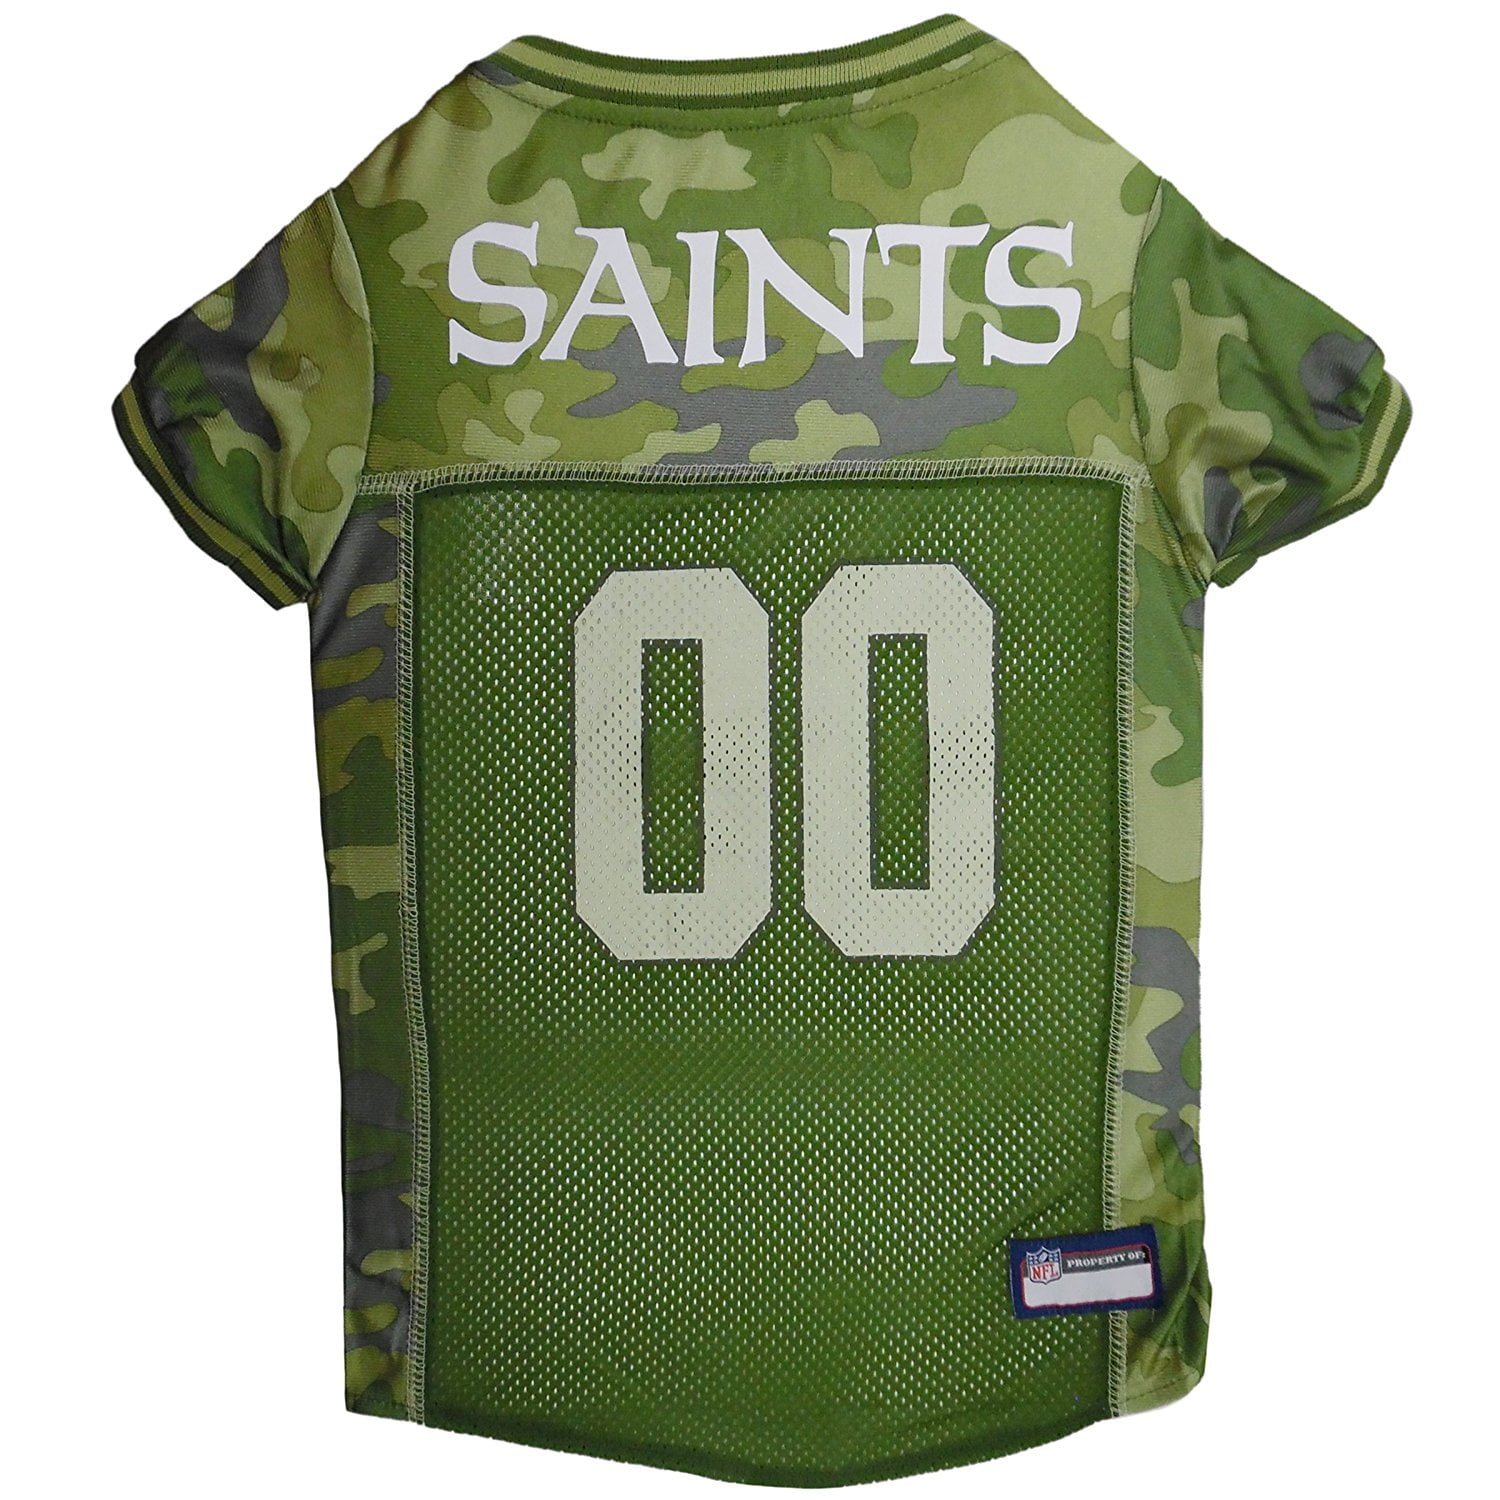 saints camouflage jersey